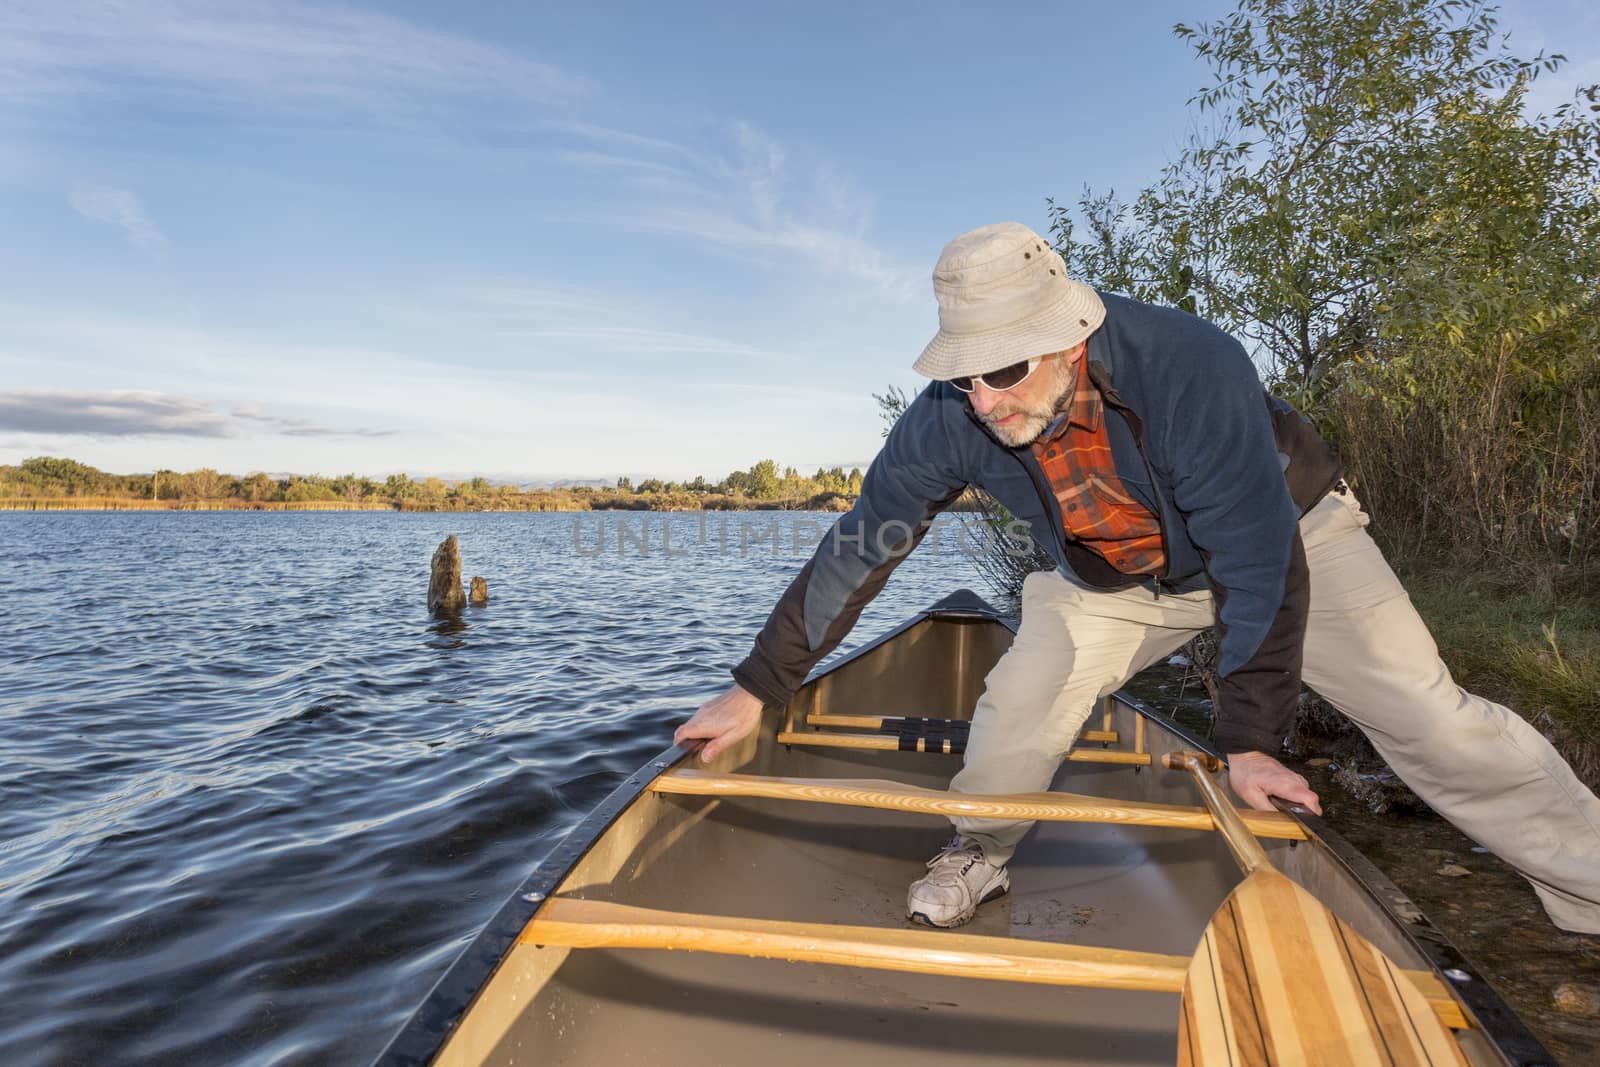 launching canoe on a lake by PixelsAway